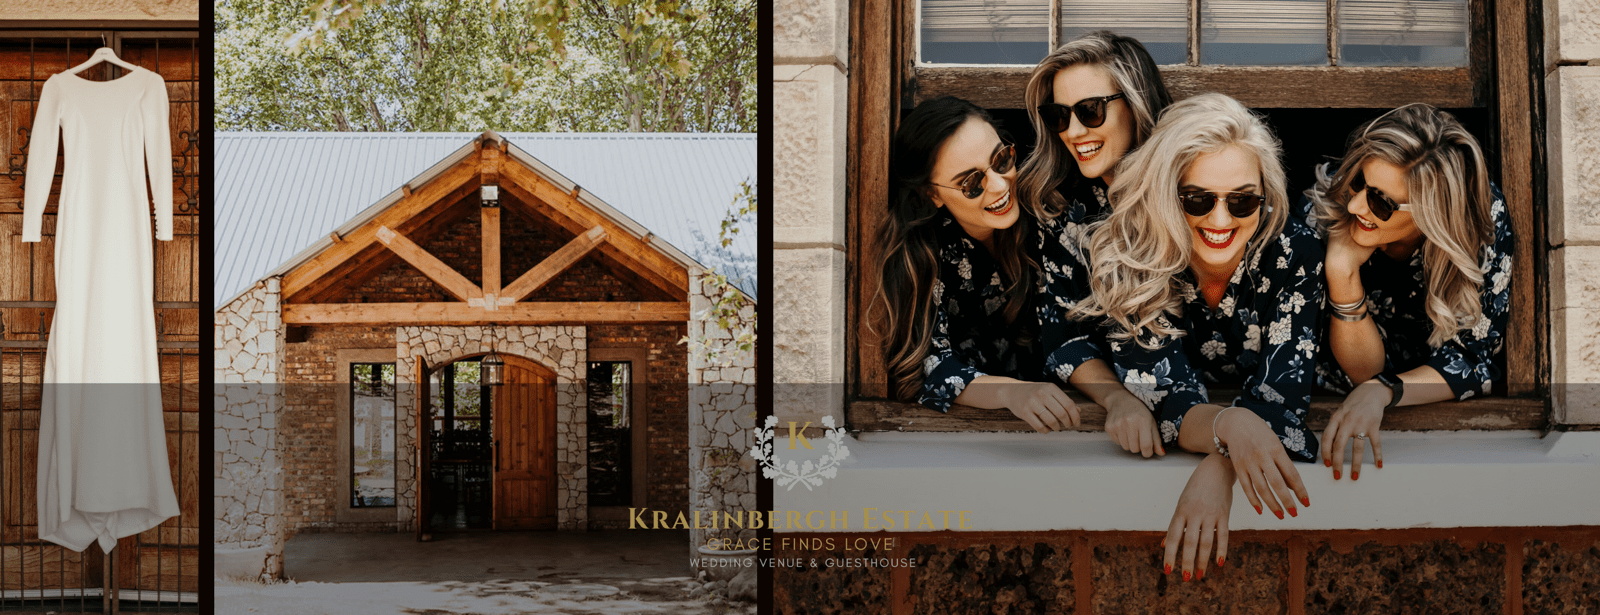 Kralinbergh – Elegant Wedding Venue in Ermelo